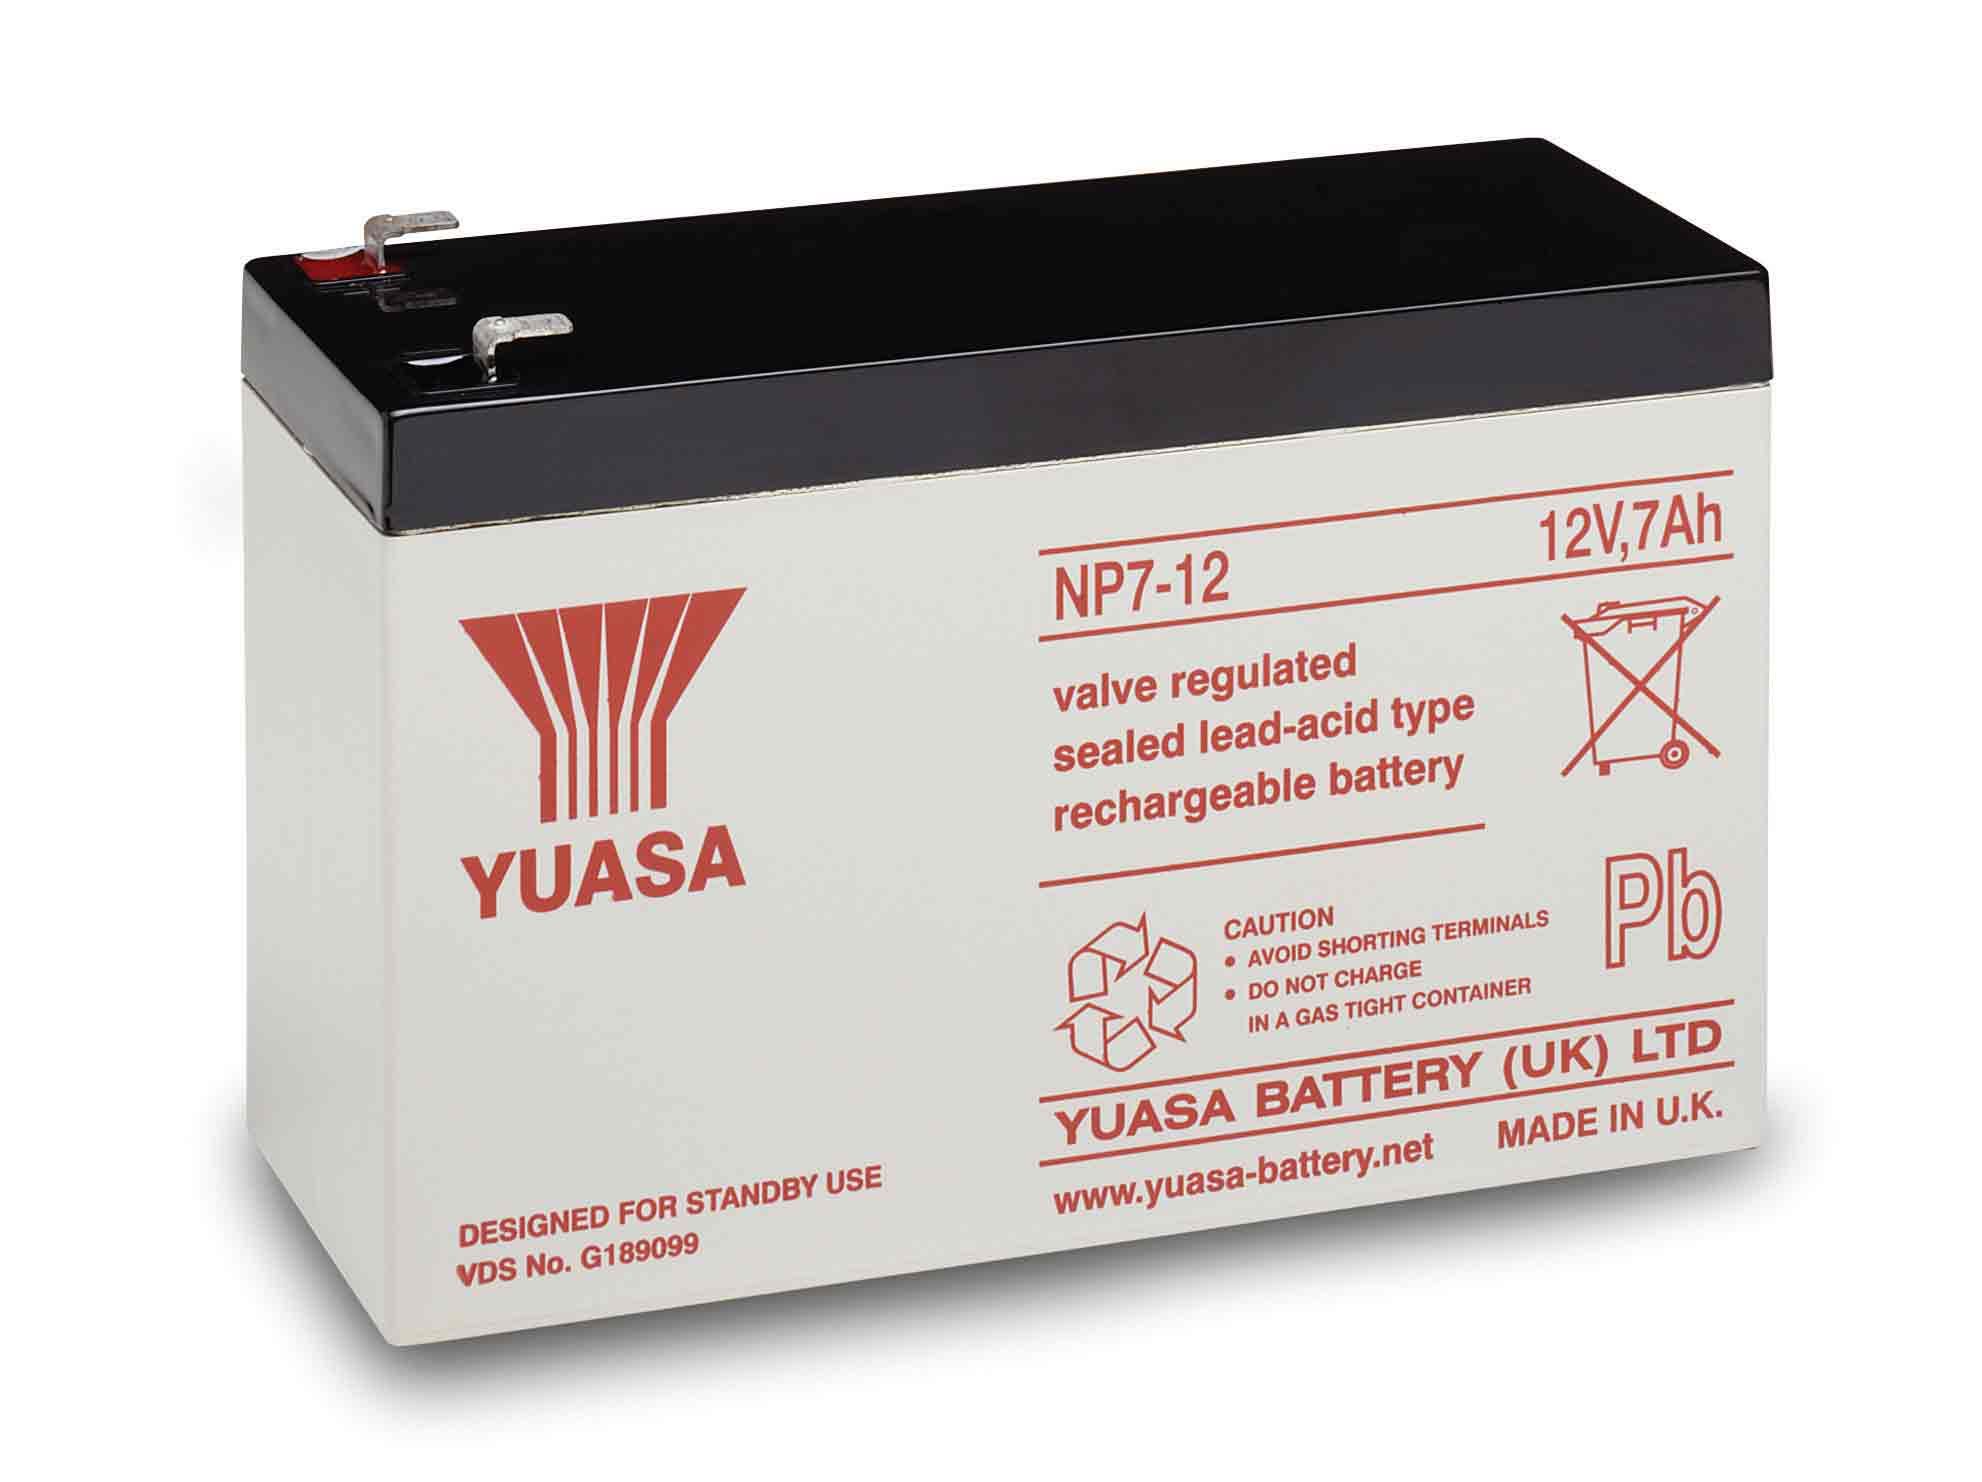 YUASA NP7-12, 12V 7AH 20HR VALVE REGULATED LEAD ACID BATTERY (AS 6AH, 7.2AH, 7.5AH & 8AH) with 4.8mm / 0.187" WIDE MALE SPADE CONNECTIONS